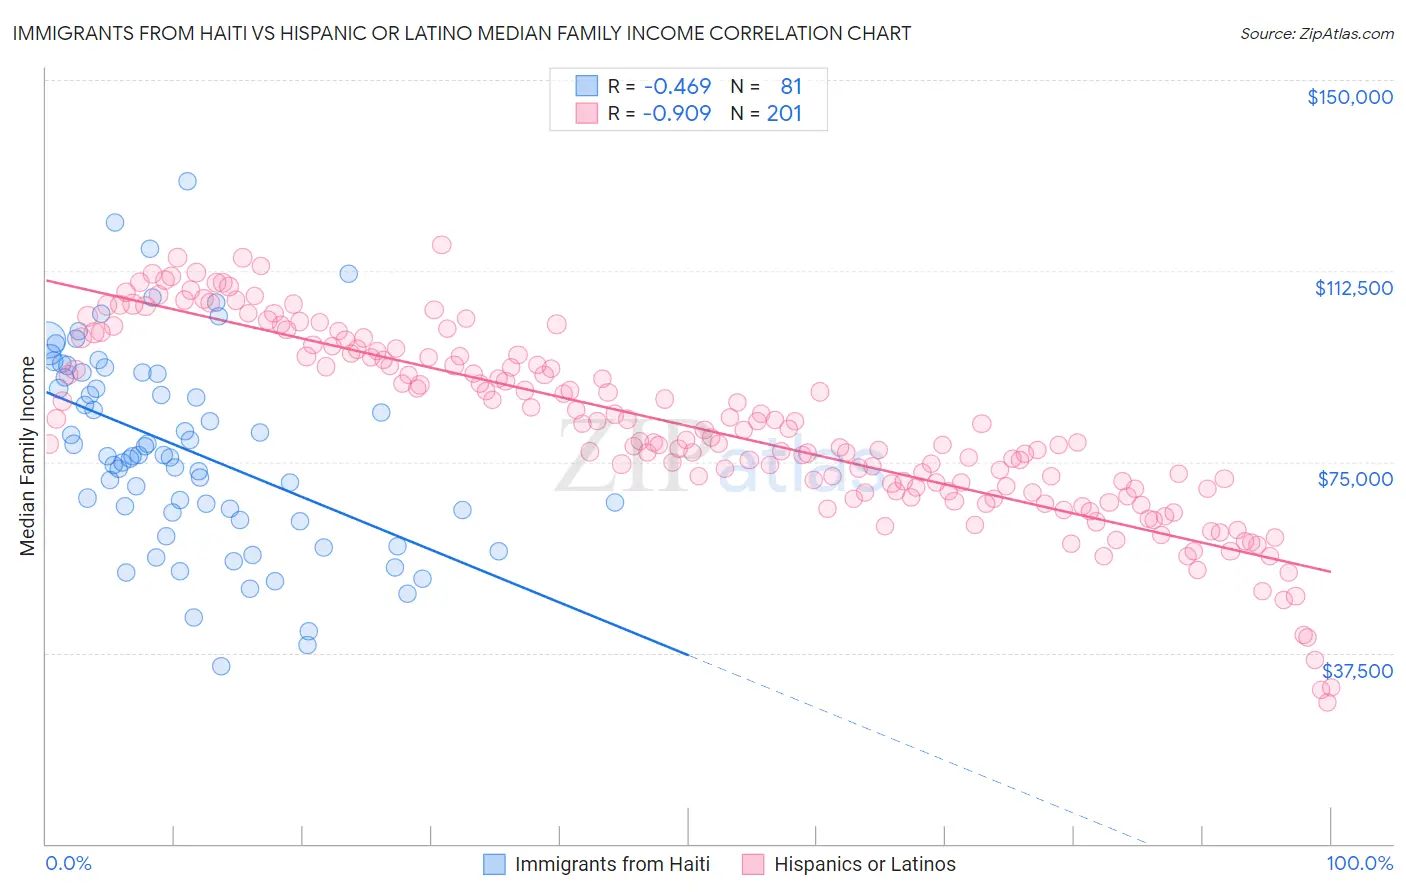 Immigrants from Haiti vs Hispanic or Latino Median Family Income